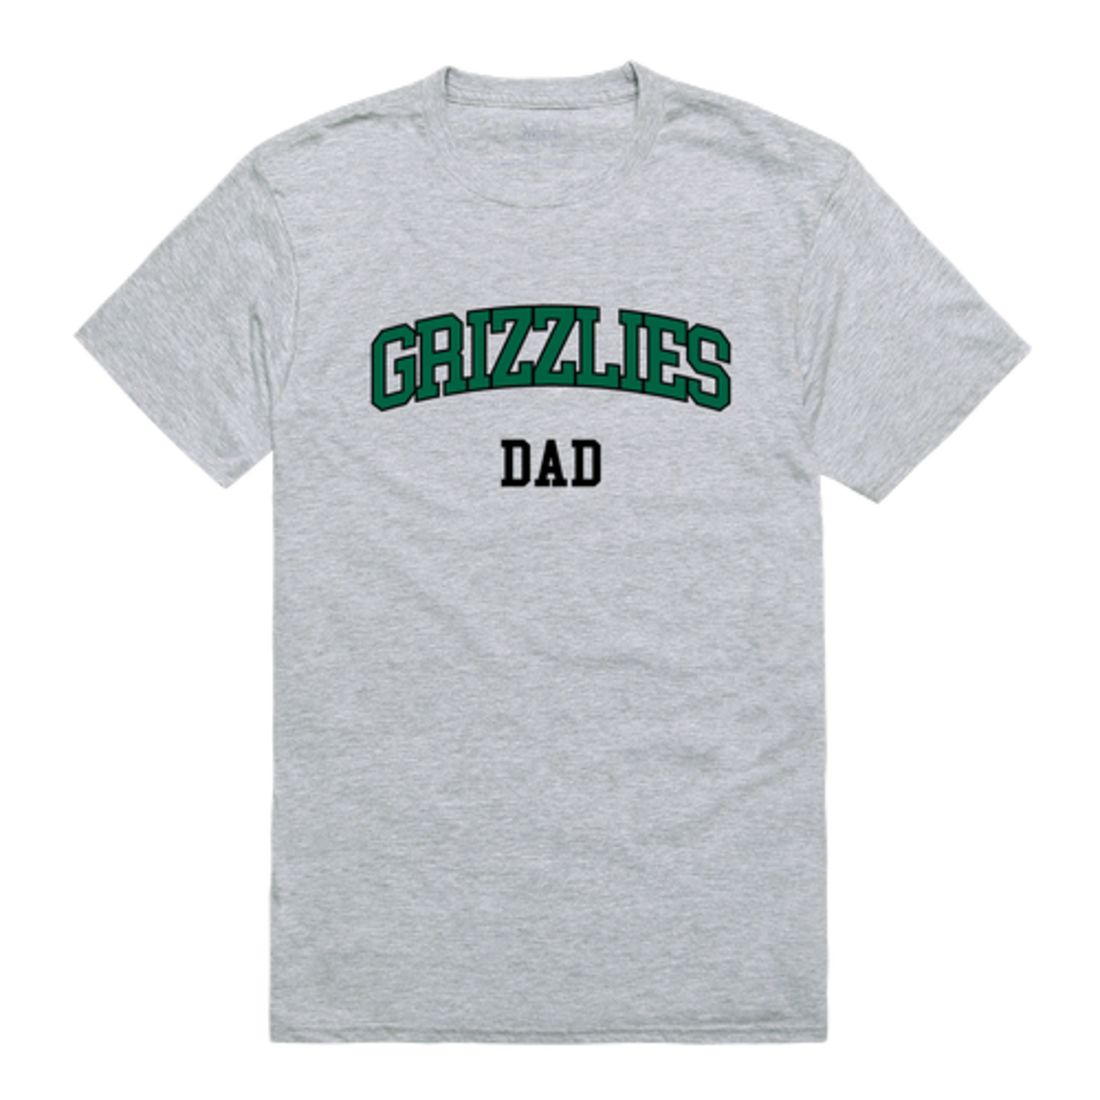 Georgia Gwinnett College Grizzlies Dad T-Shirt